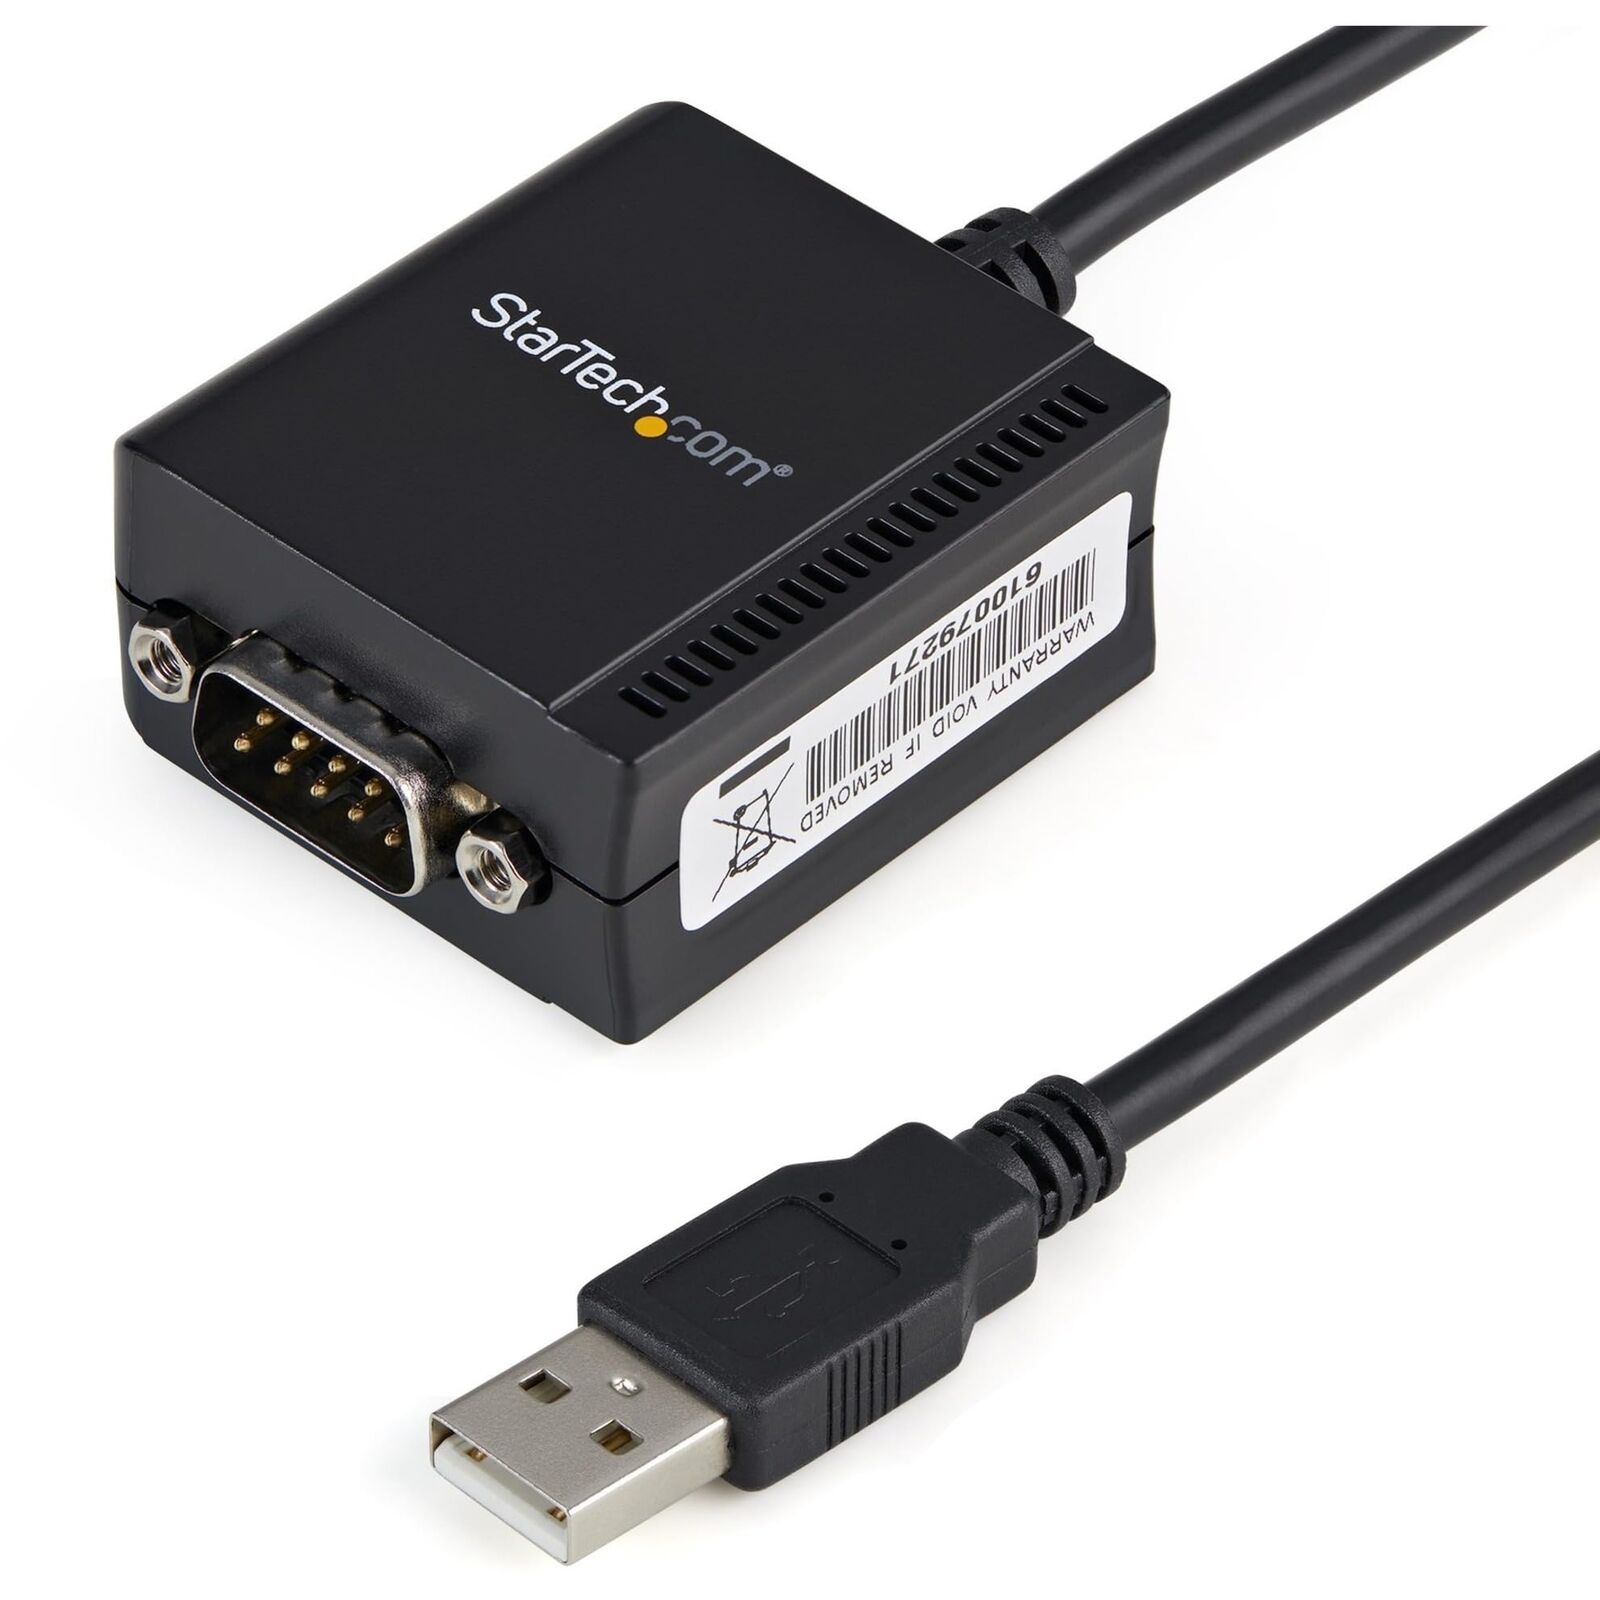 StarTech.com USB to Serial Adapter - 1 port - USB Powered -